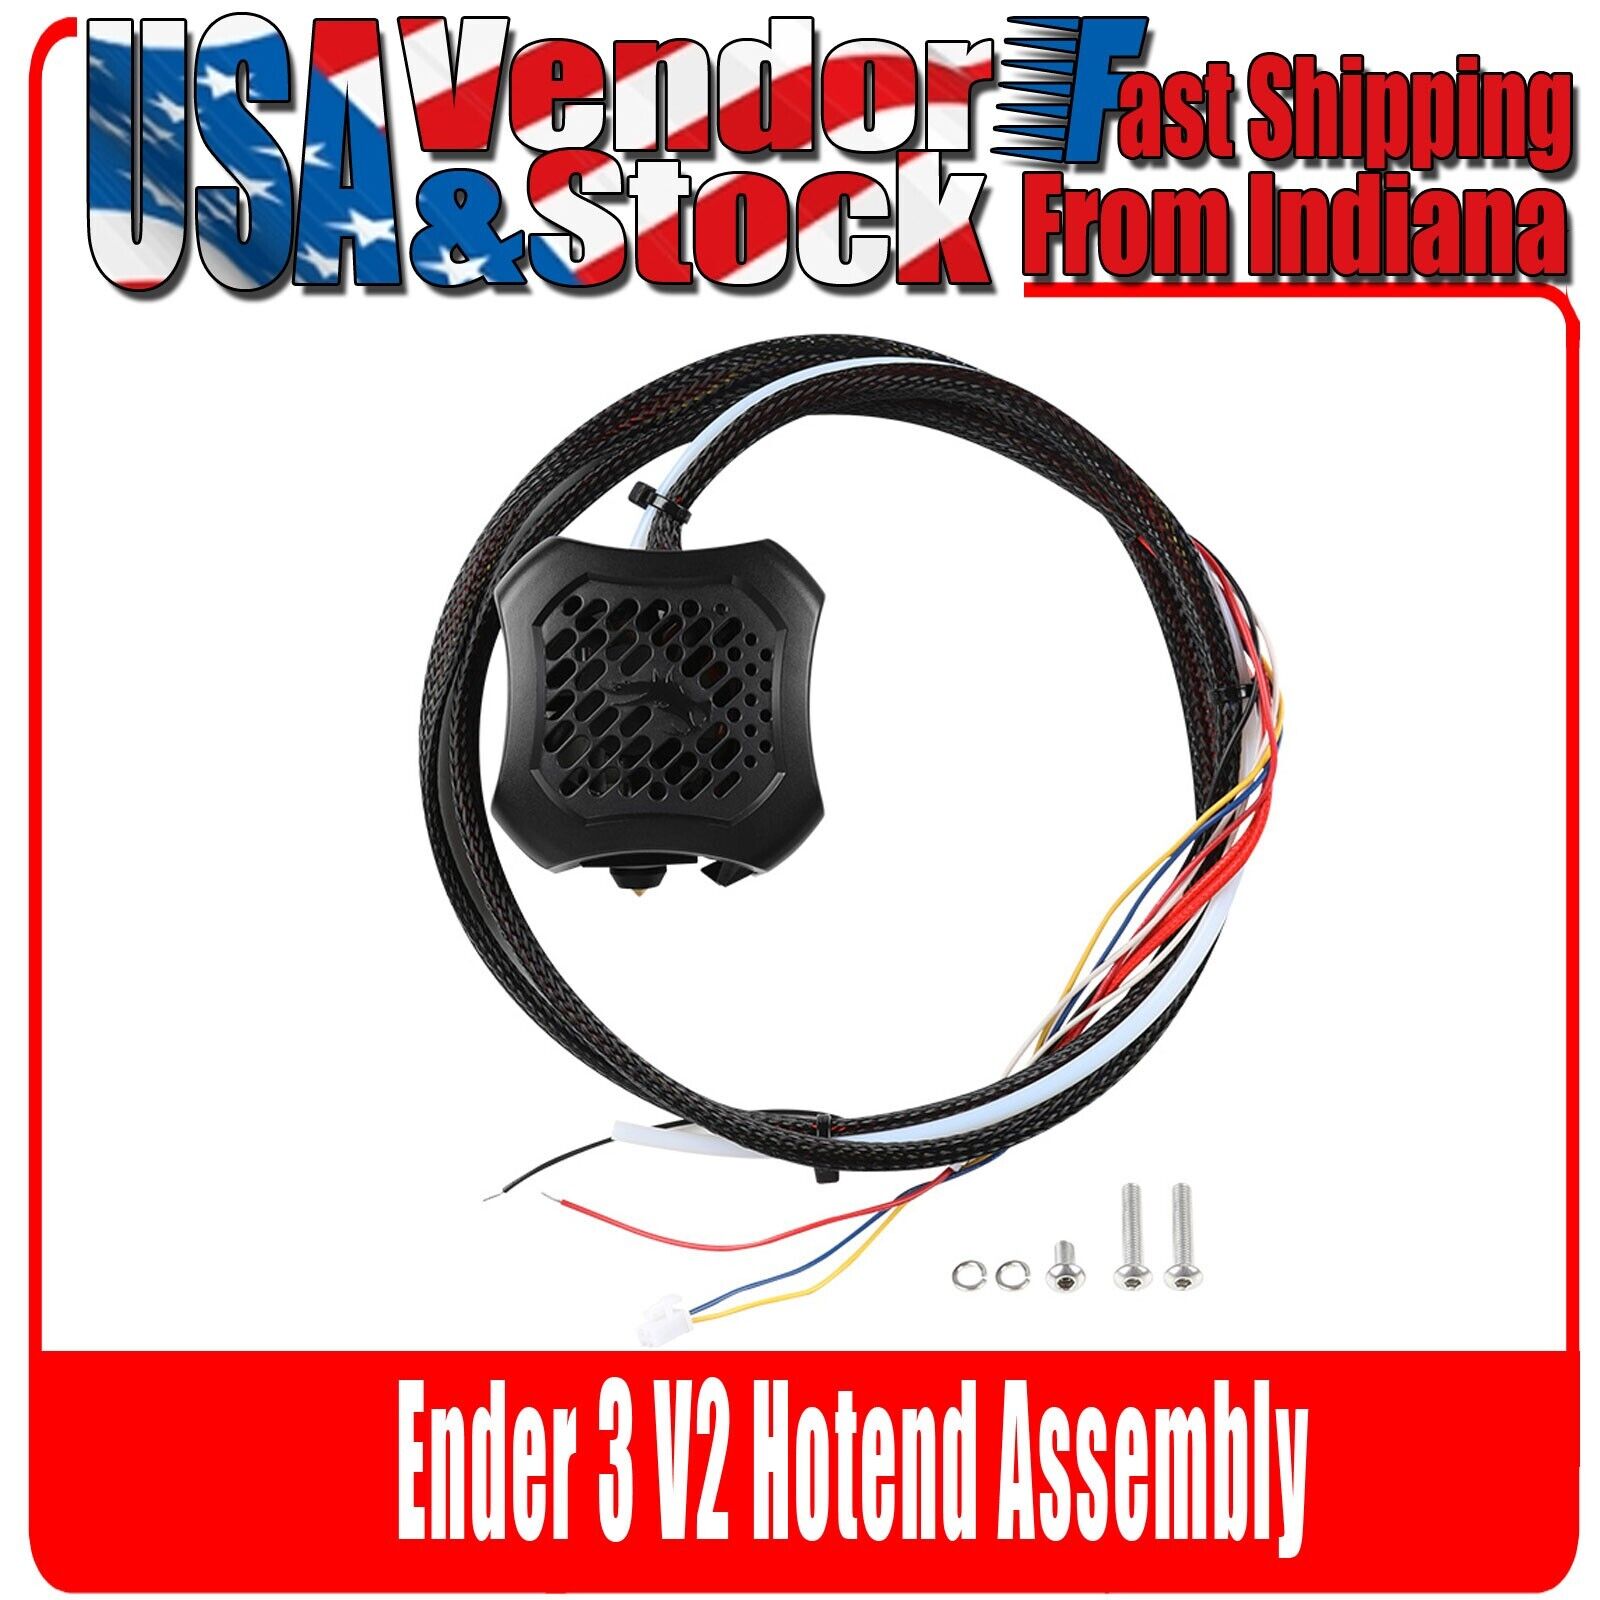 Ender 3 V2 Hotend Extruder Assembly Kit, Original Creality Hotend and Extruder